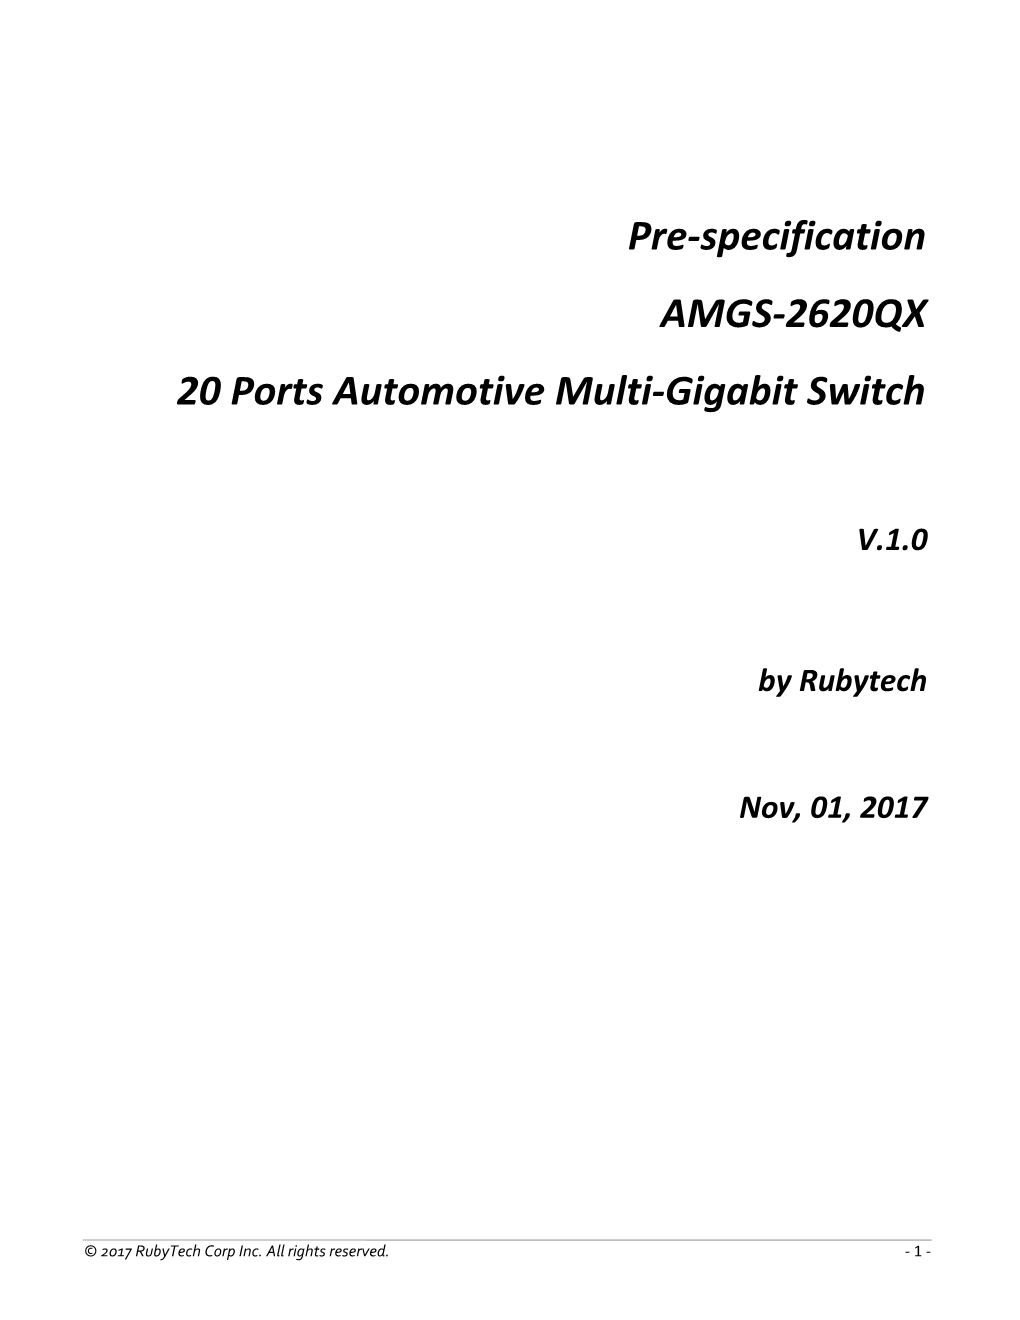 20 Ports Automotive Multi-Gigabit Switch